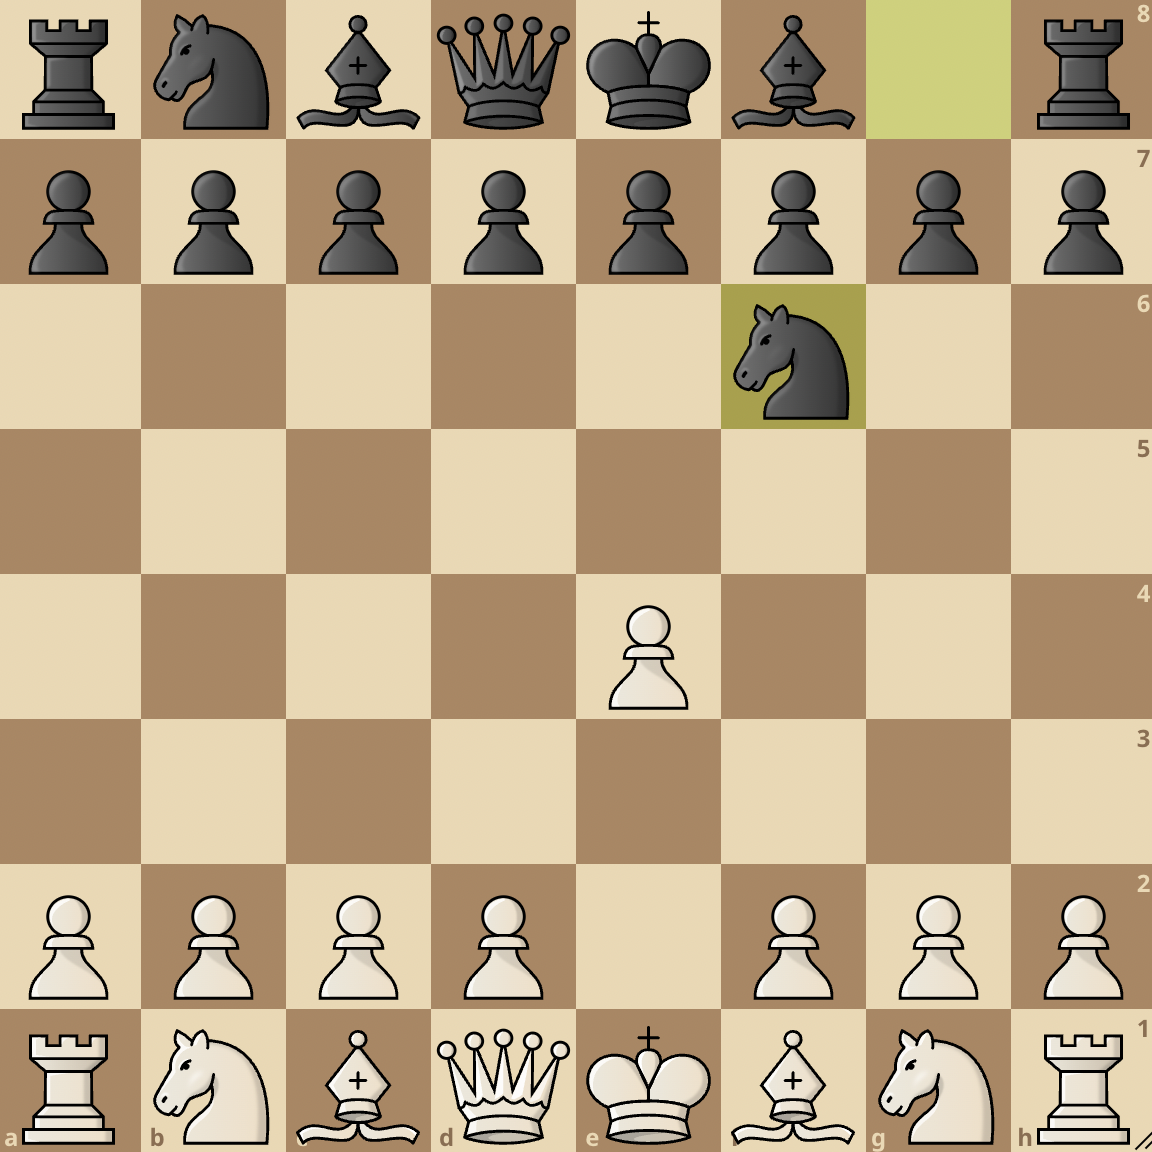 Alekhine Defense: 1. e4 Nf6 